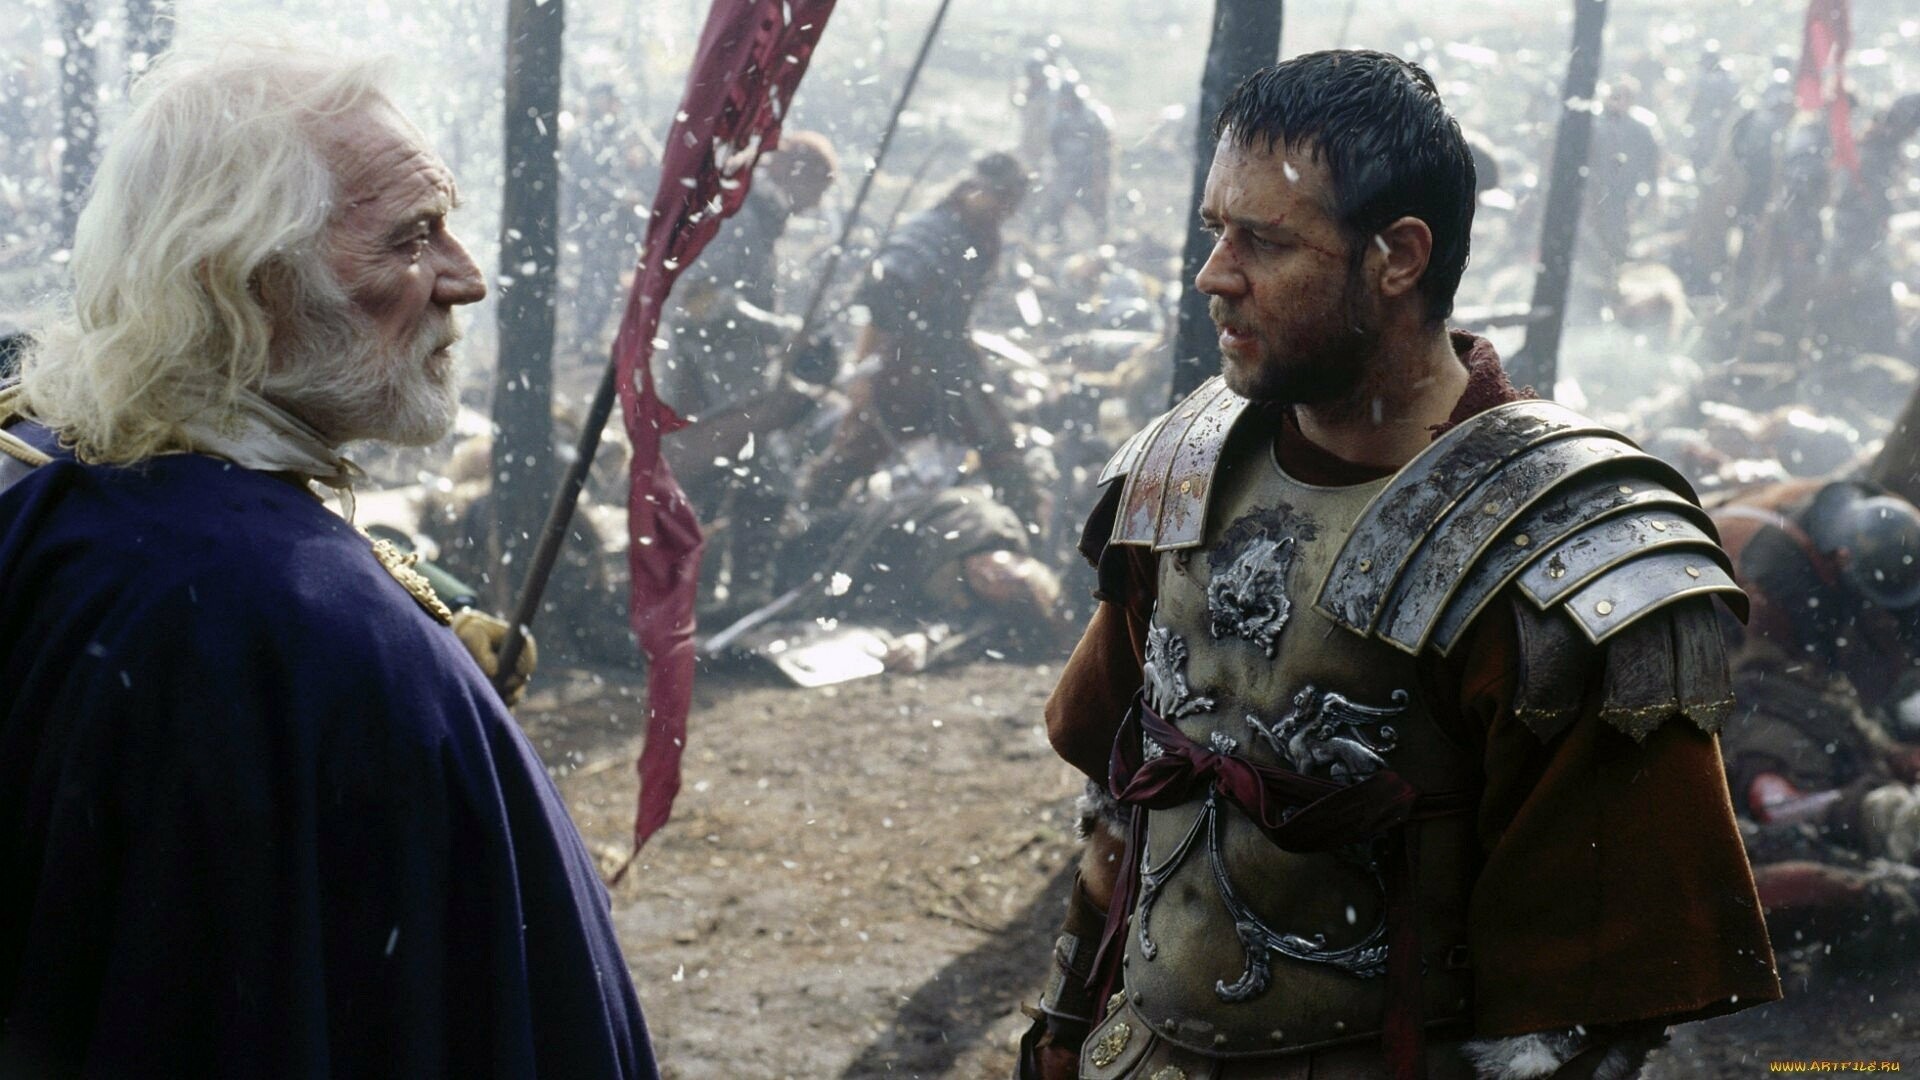 Gladiator: A 2000 film about a Roman general named Maximus, Marcus Aurelius. 1920x1080 Full HD Wallpaper.